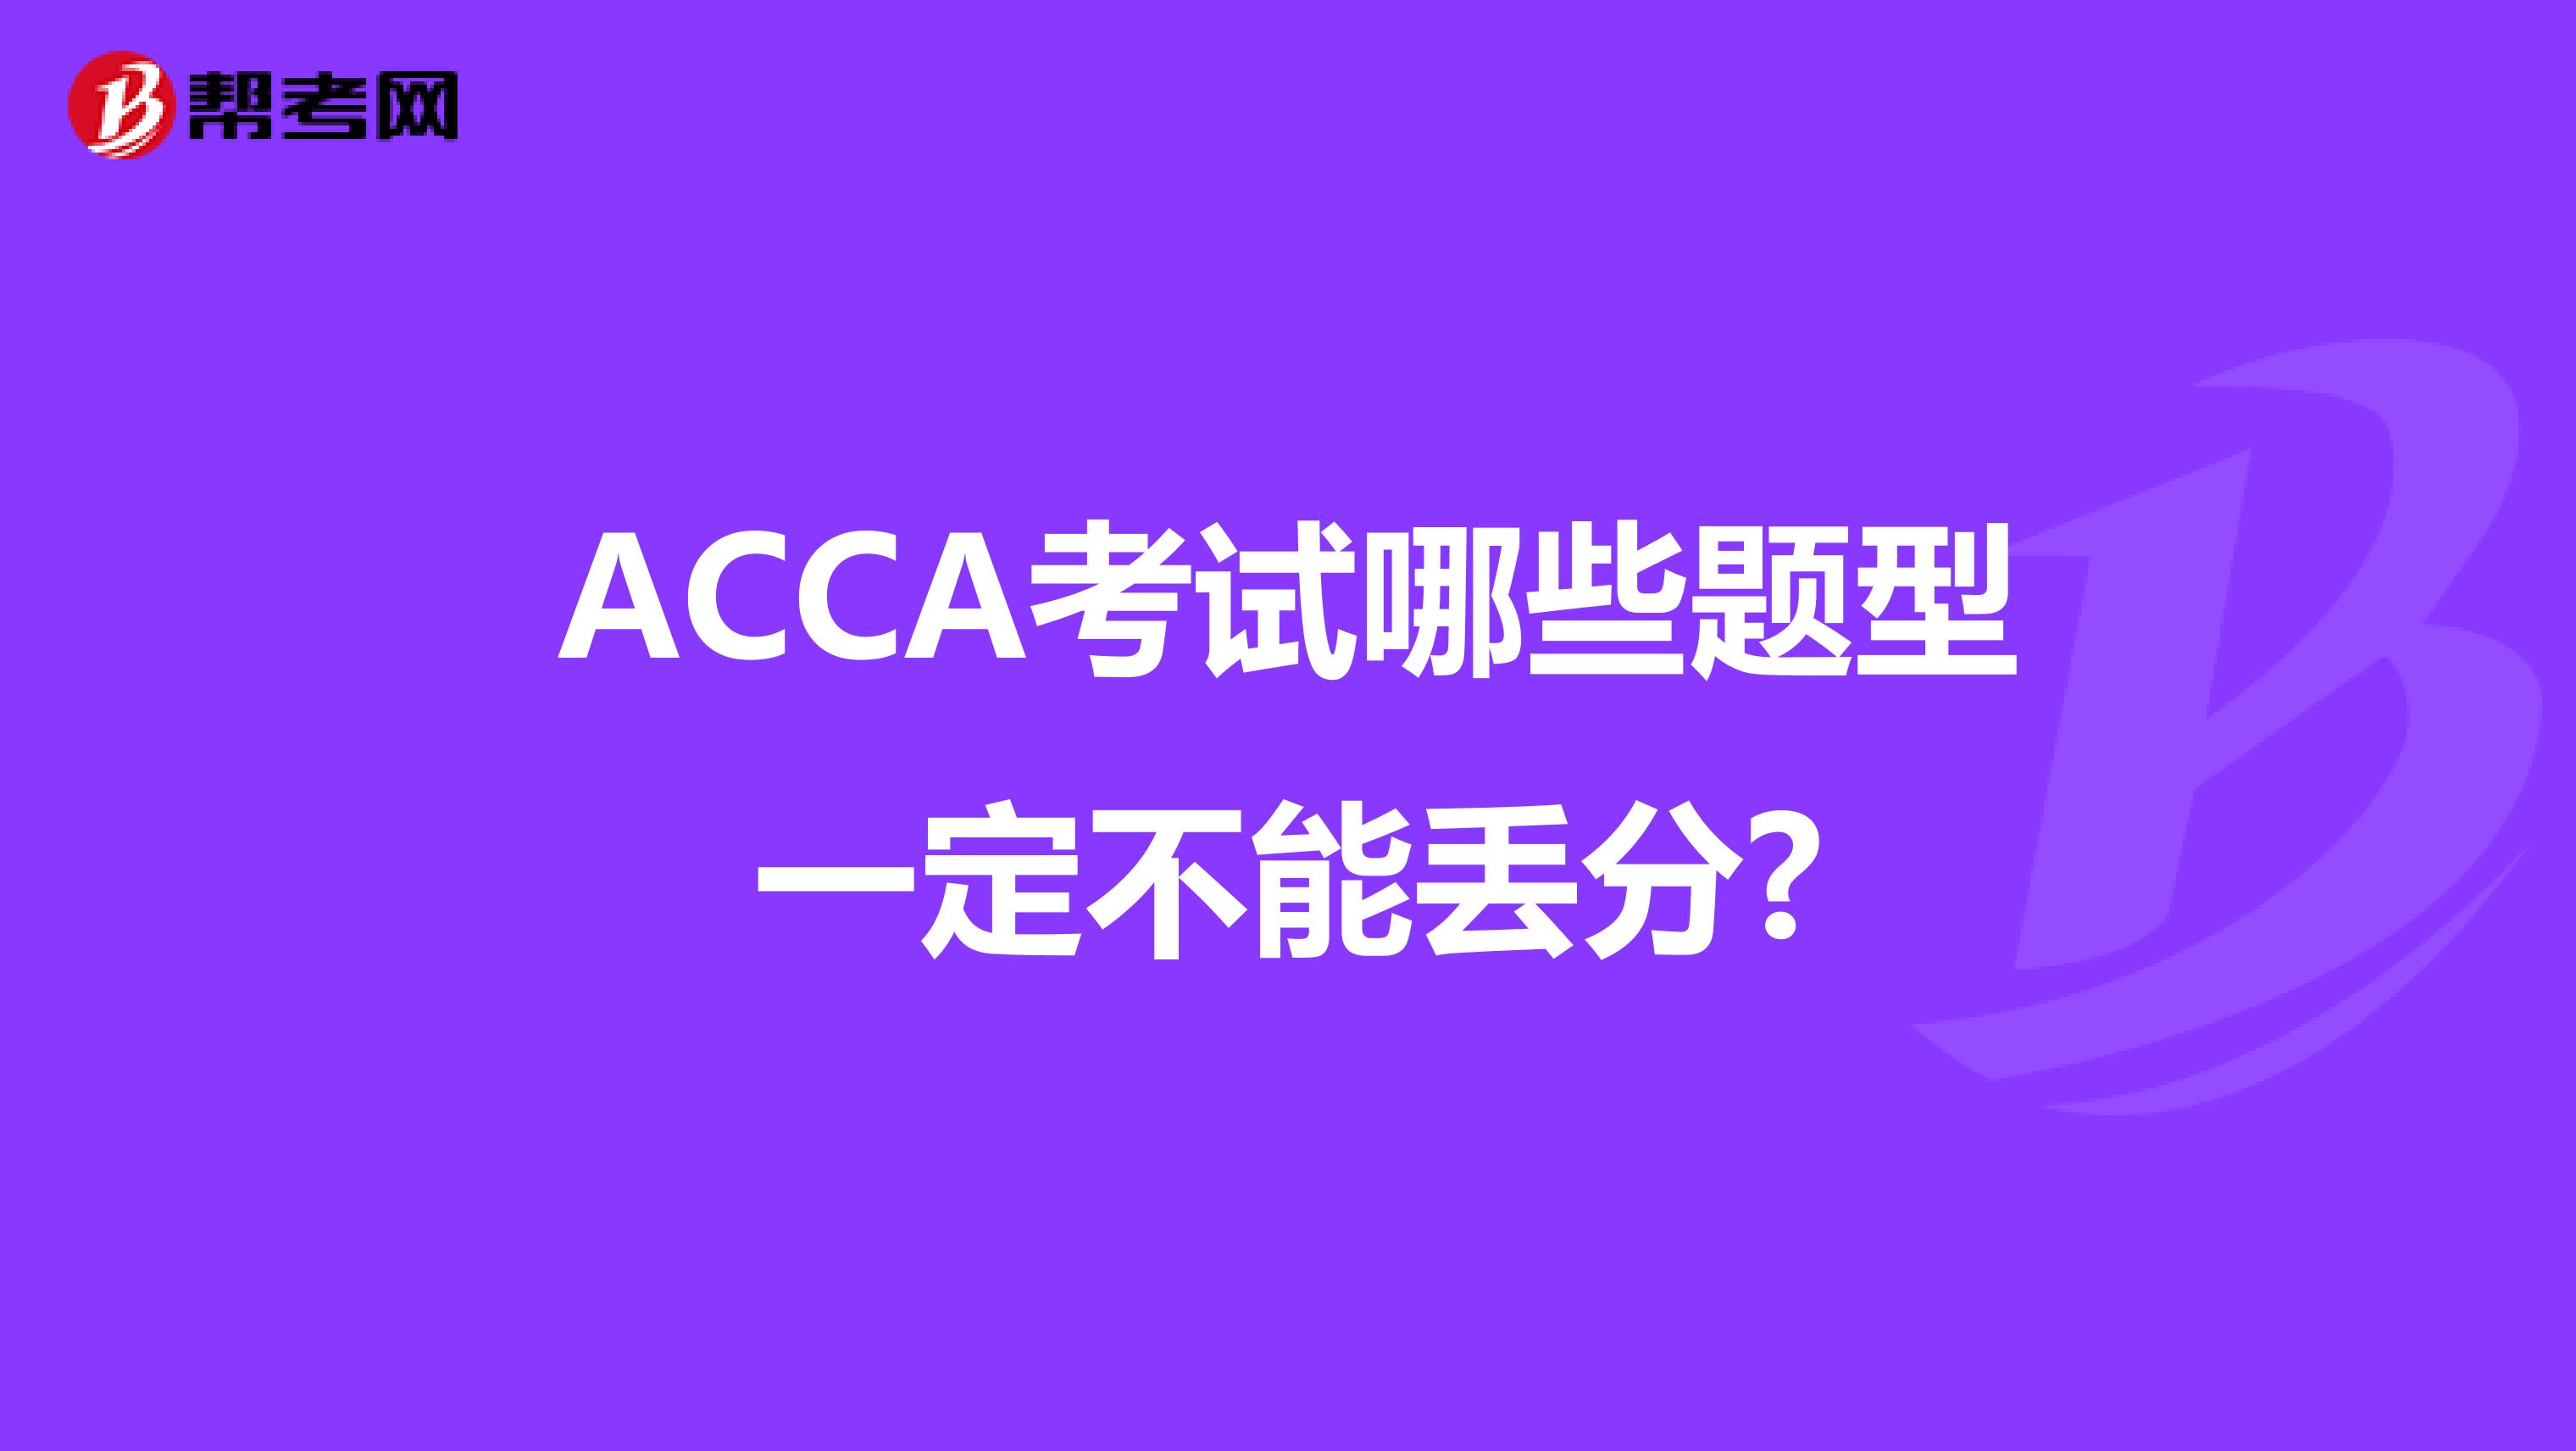 ACCA考试哪些题型一定不能丢分?